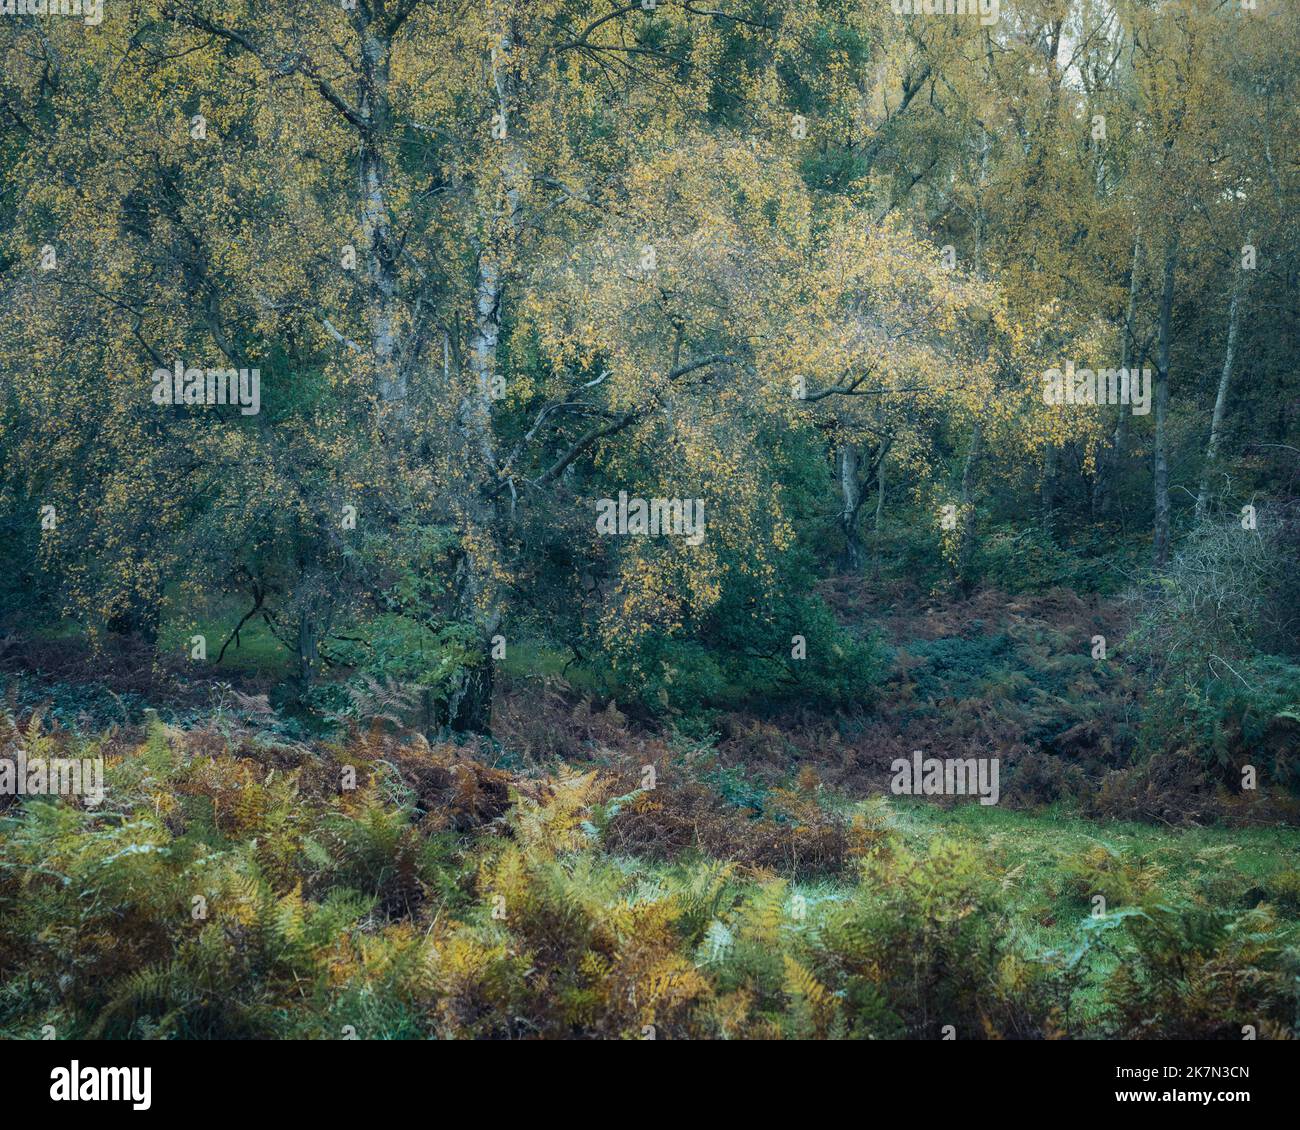 A beautiful landscape of an autumn forest in Ashridge estate, UK. Stock Photo